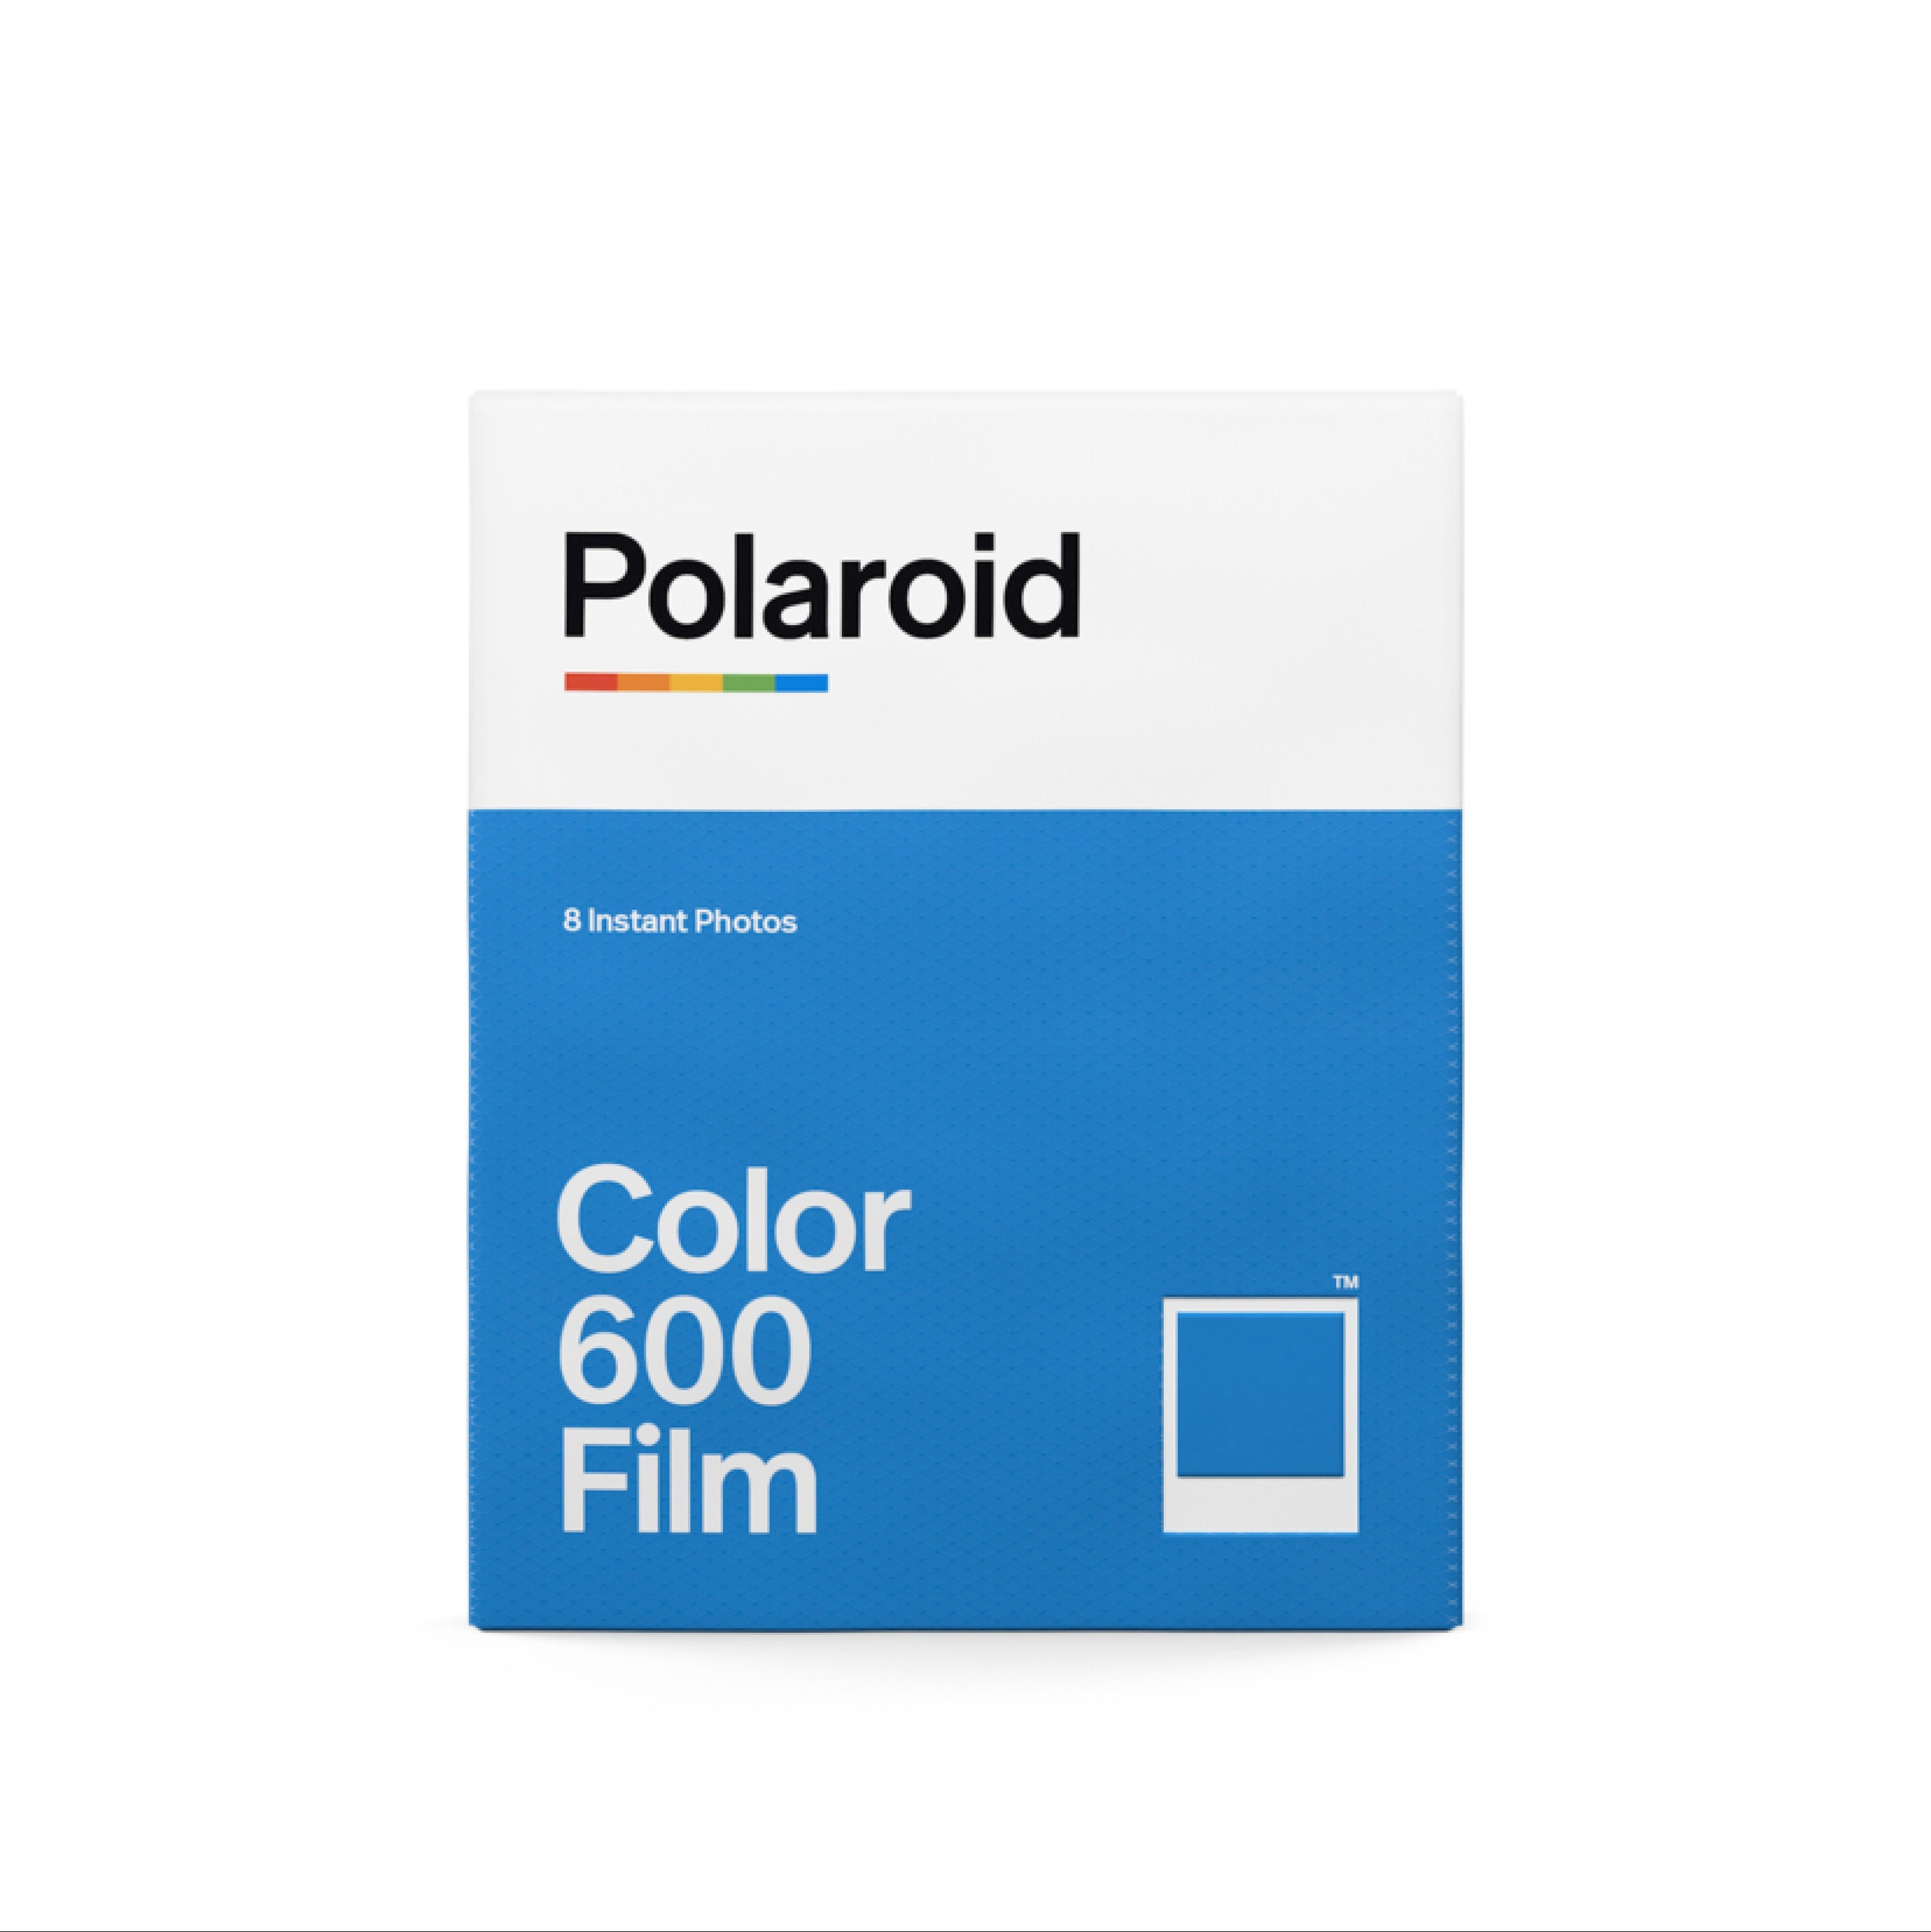 Shop : Buy Polaroid Color 600 Film 8 Instant Photos: 9120096770654 : Blue  Moon Camera and Machine